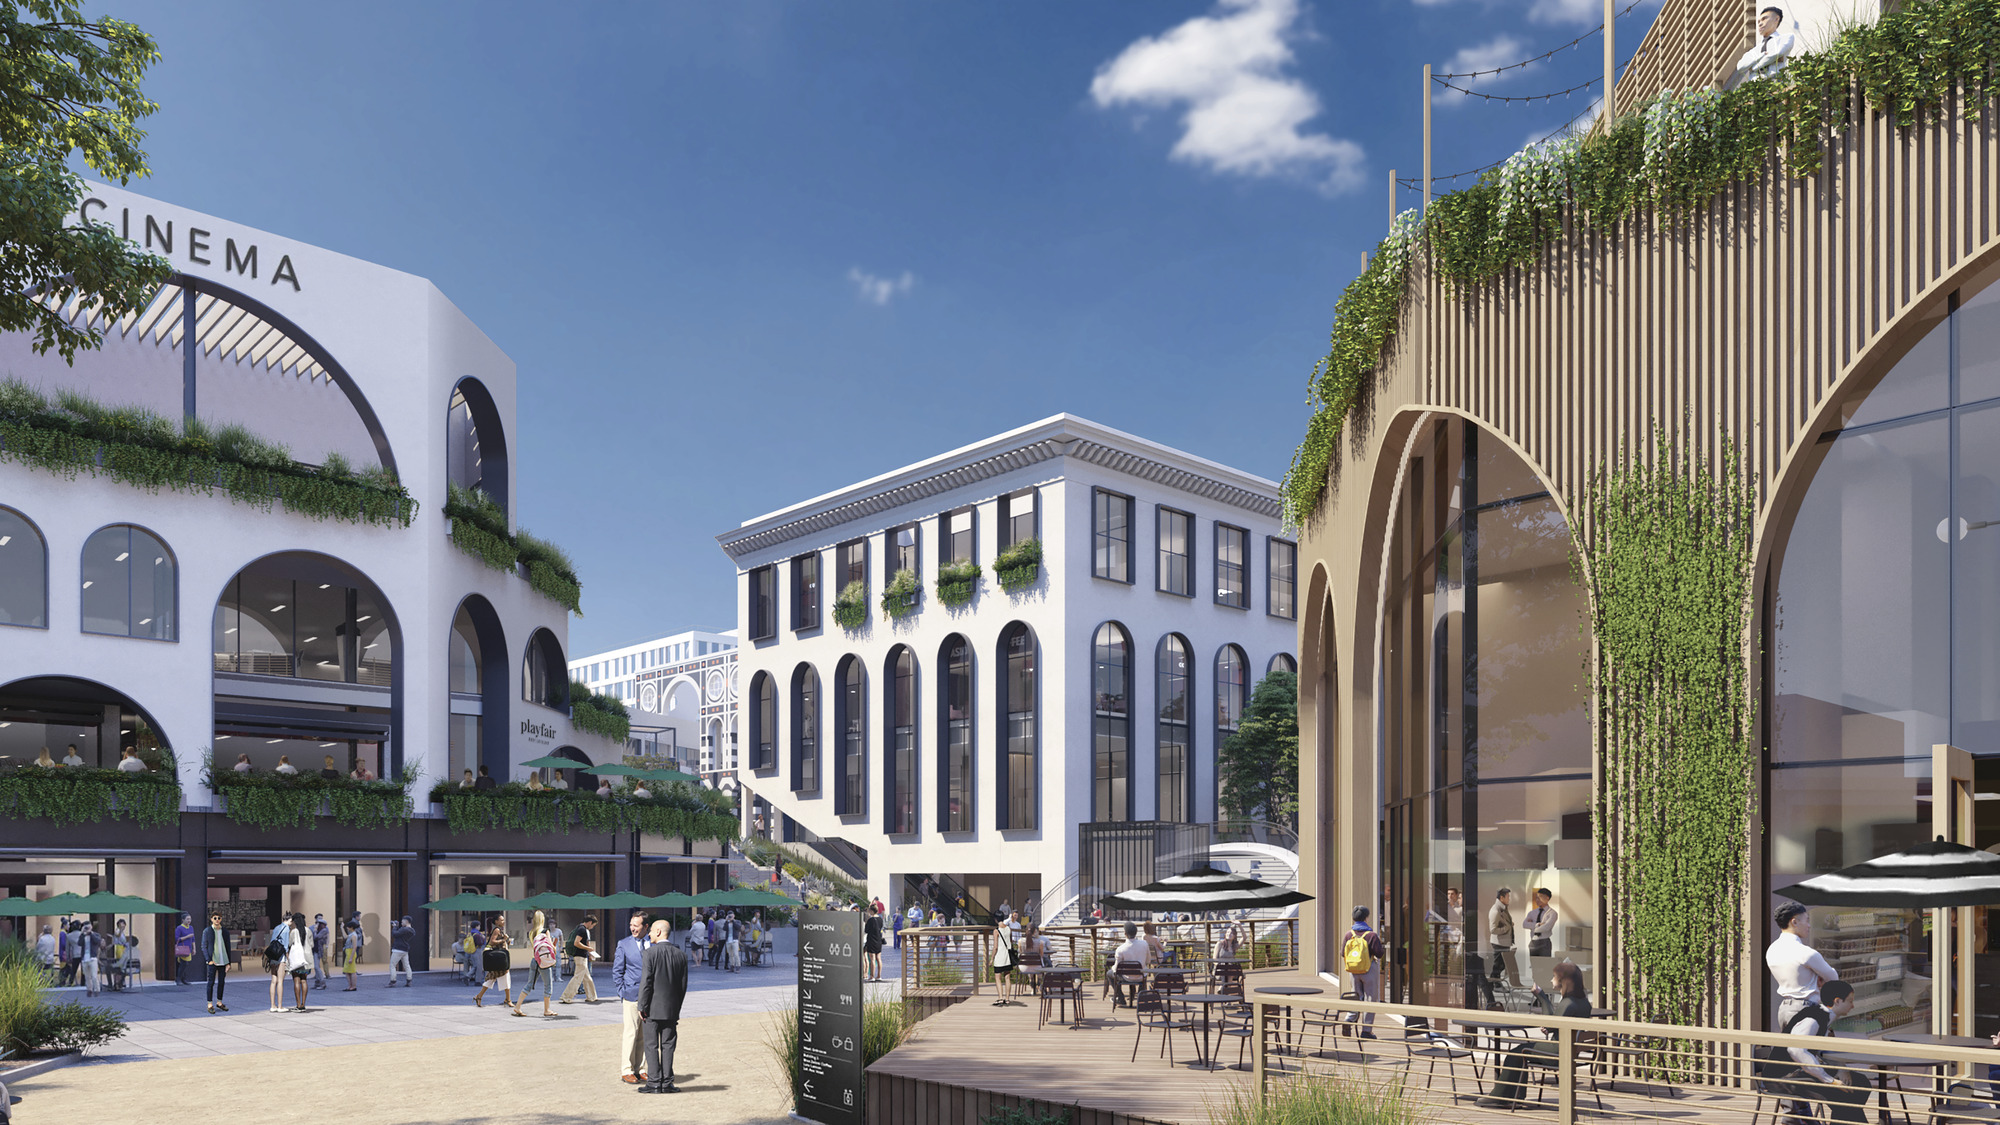 Horton Plaza Redevelopment – ABC News Update